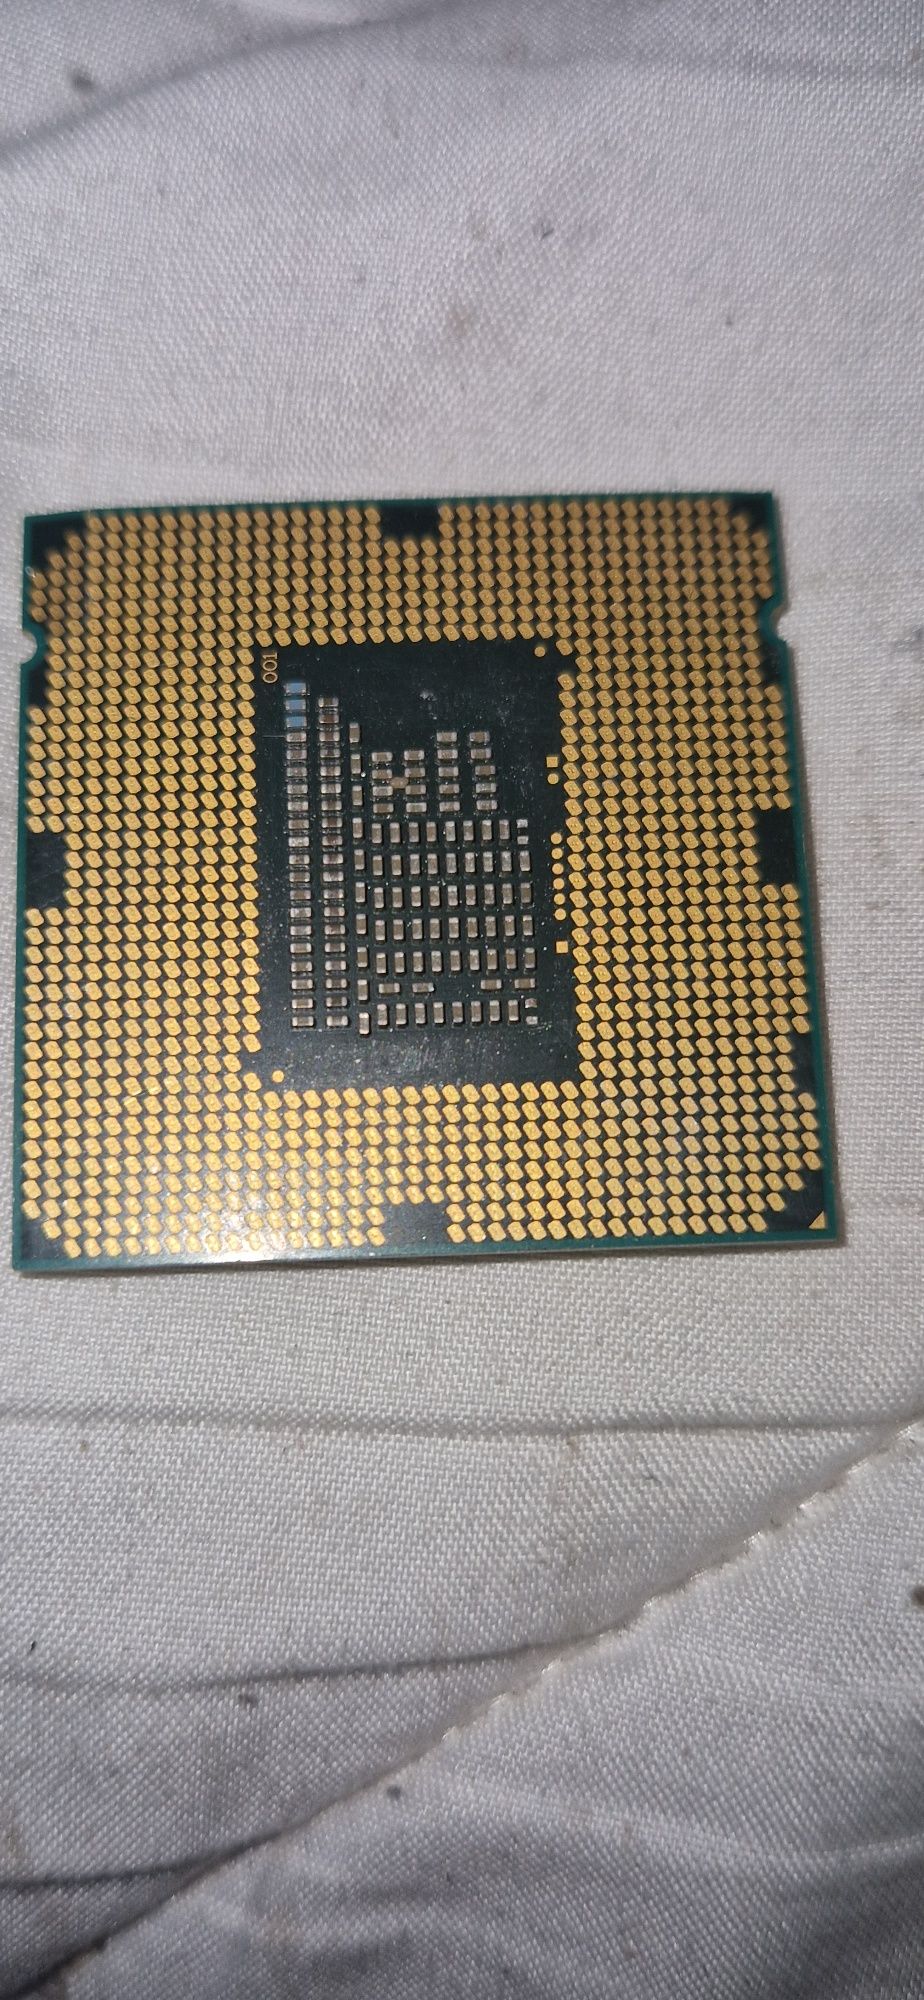 Intel core i3-2120 3.30ghz